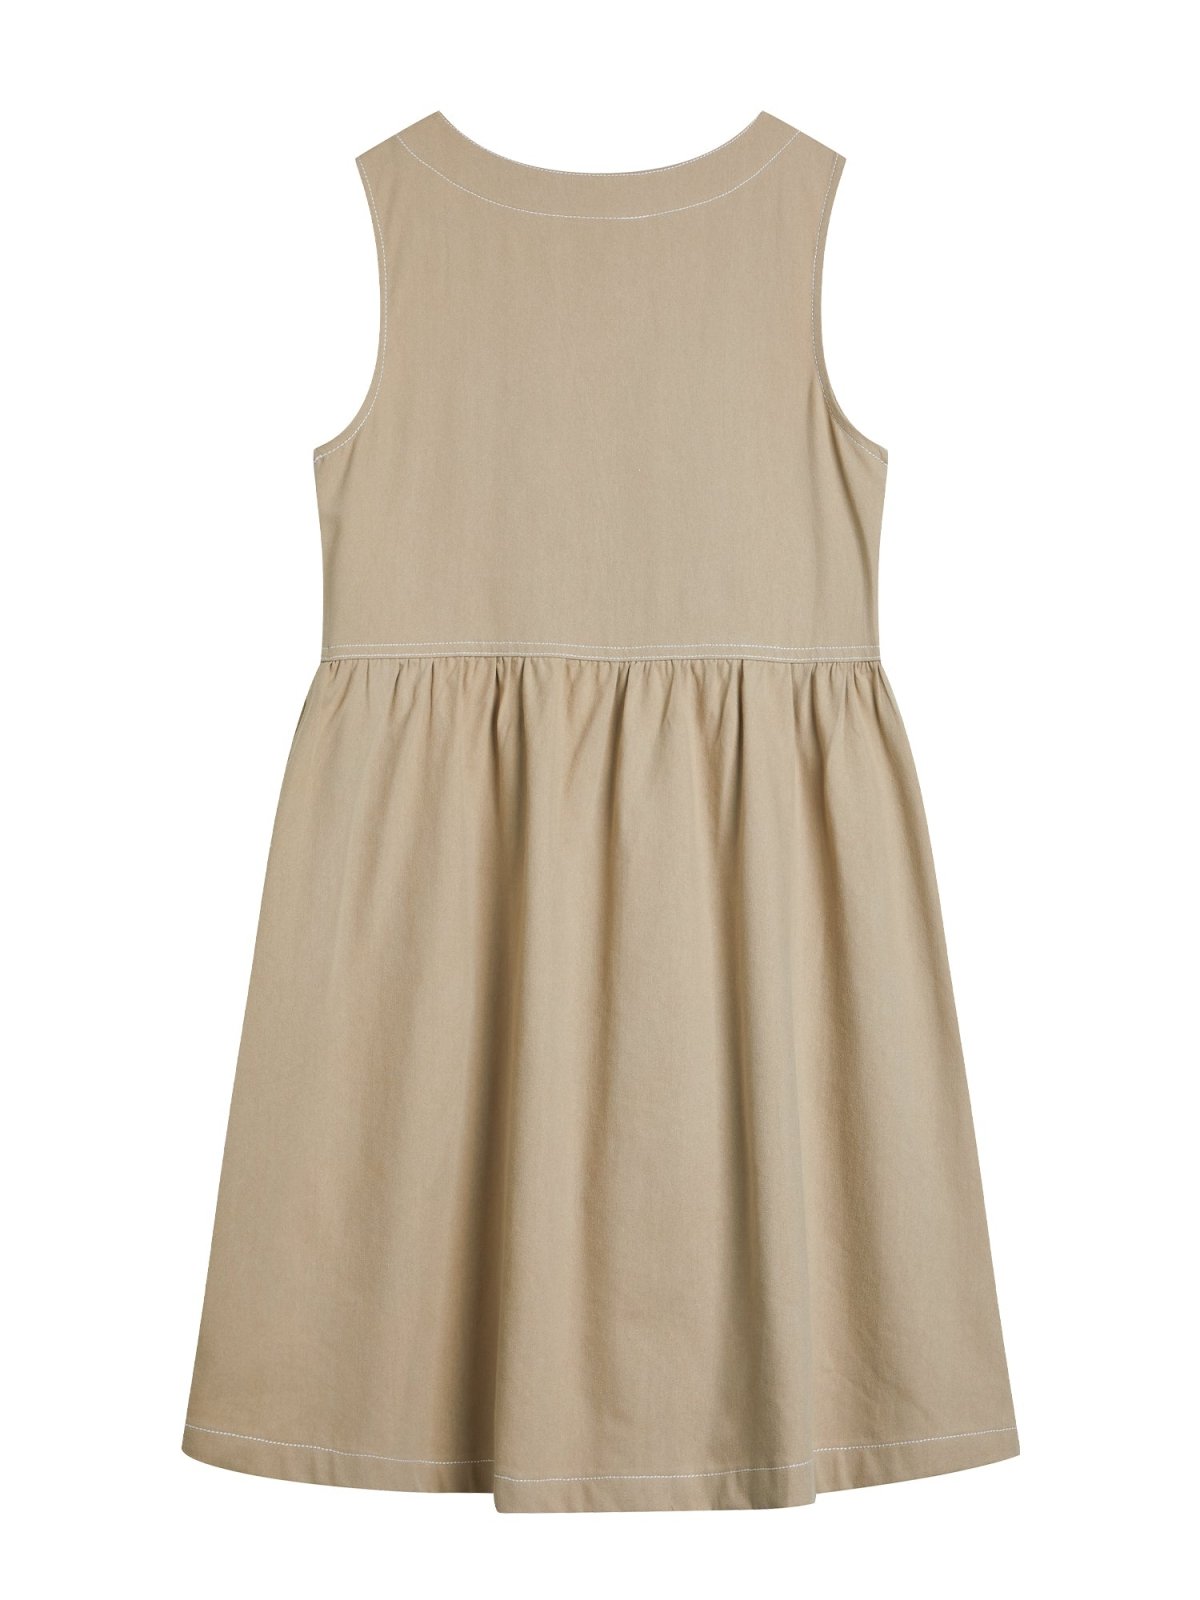 Zoe Contrast Line Mini Dress - DAG-DD9539-22CreamS - Beige - S - D'ZAGE Designs